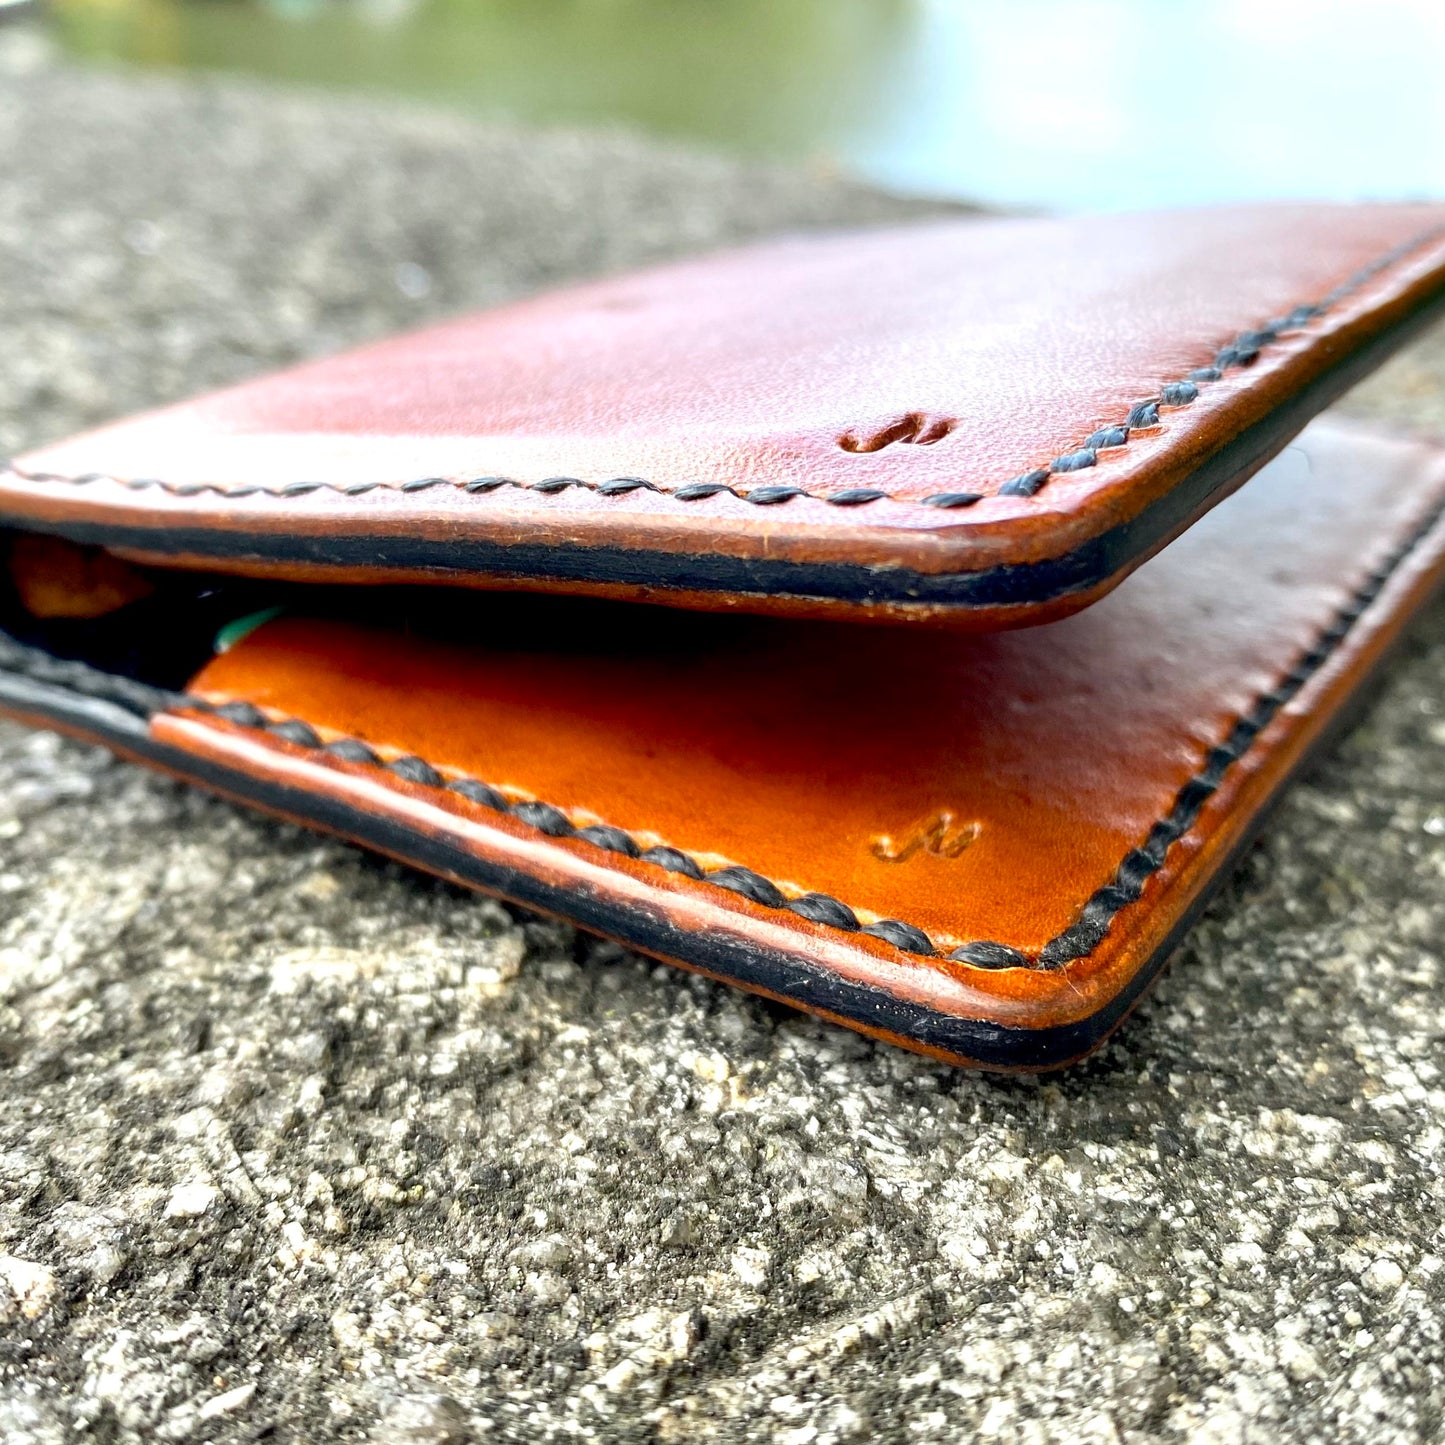 Flip wallet